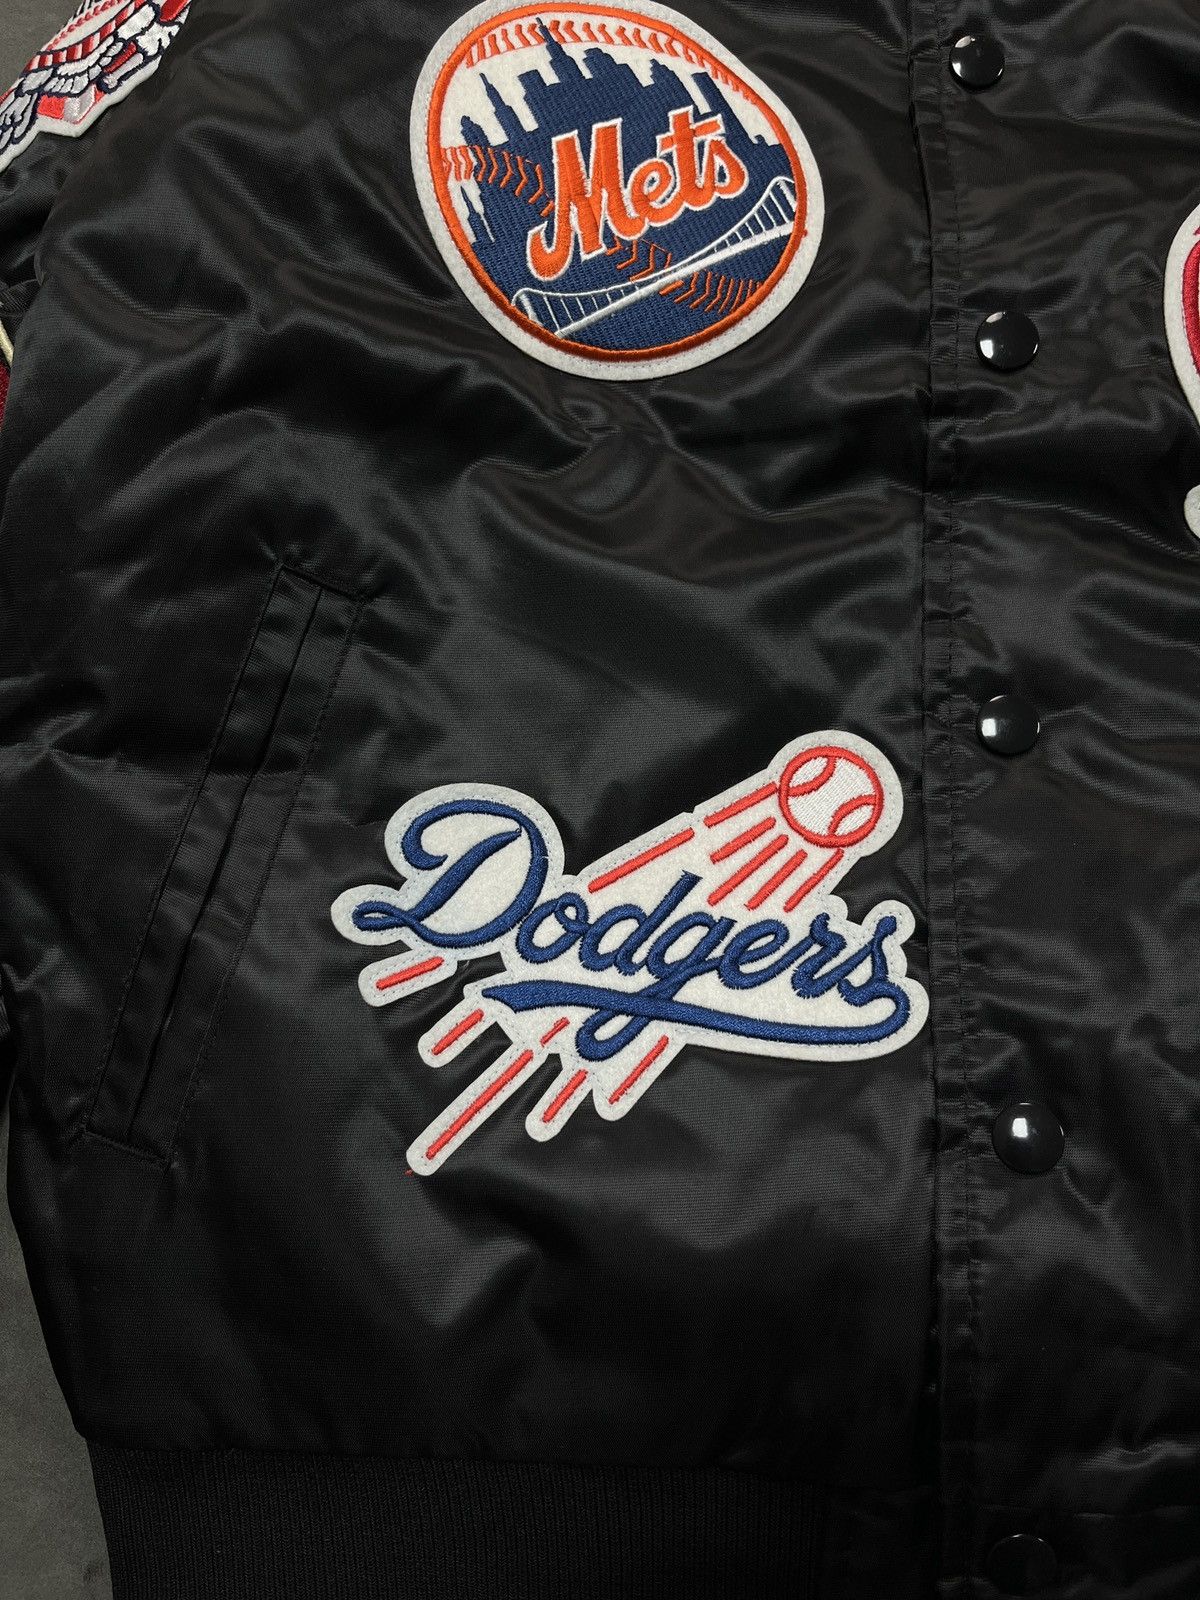 Majestic MLB All Star Logo Patch Black Satin Jacket Large - 6